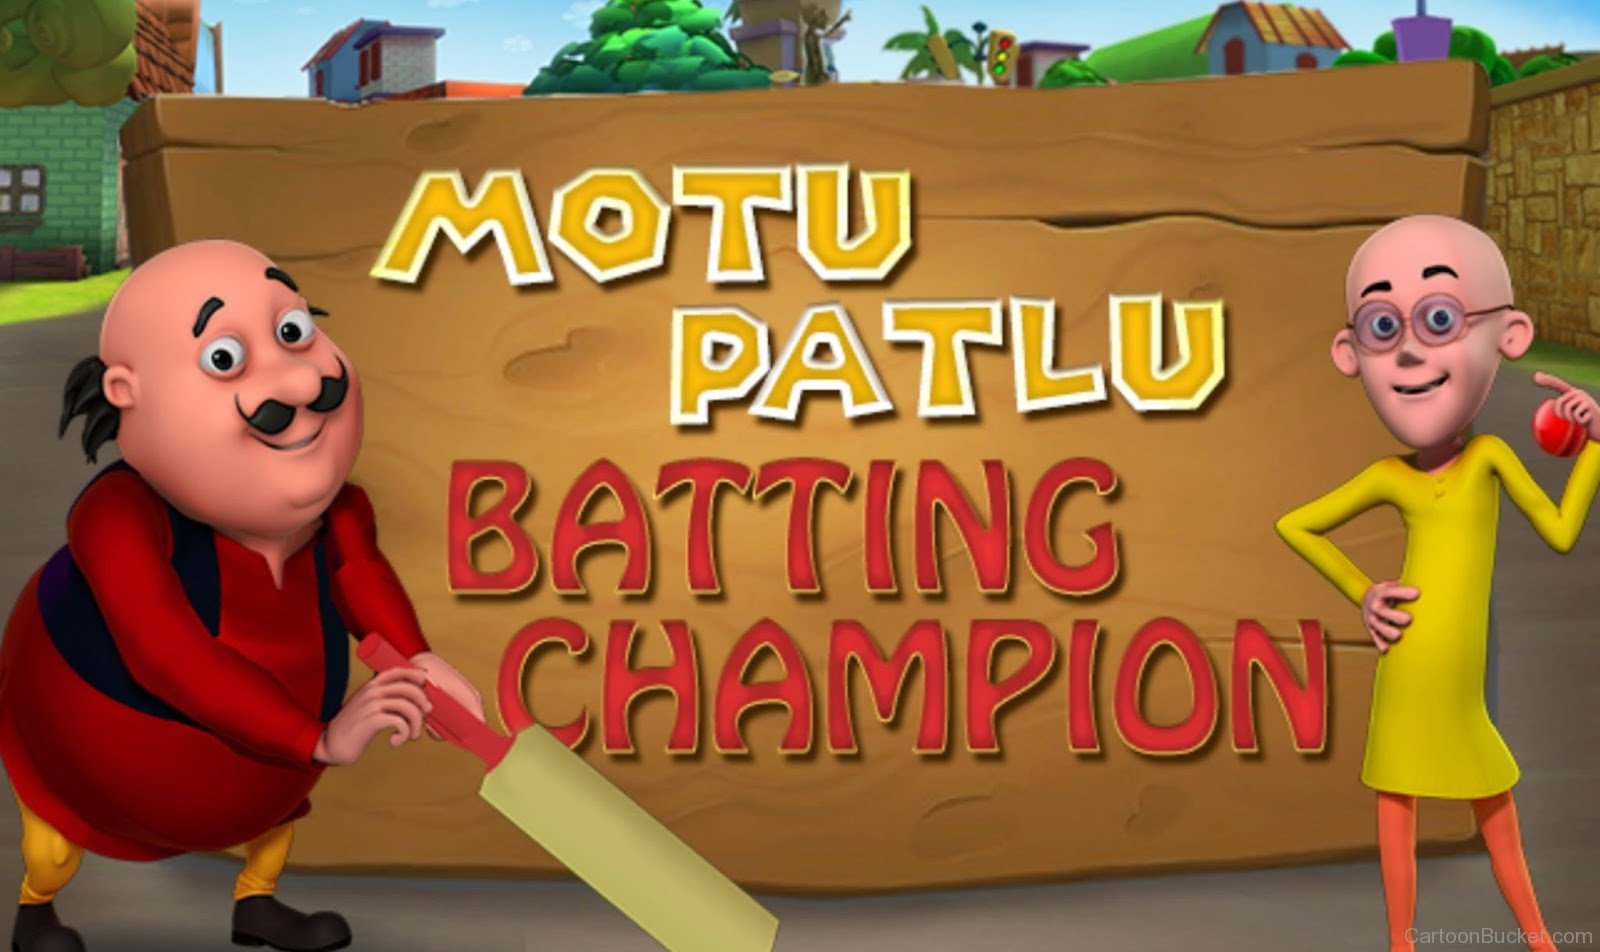 Motu Patlu Pictures, Images